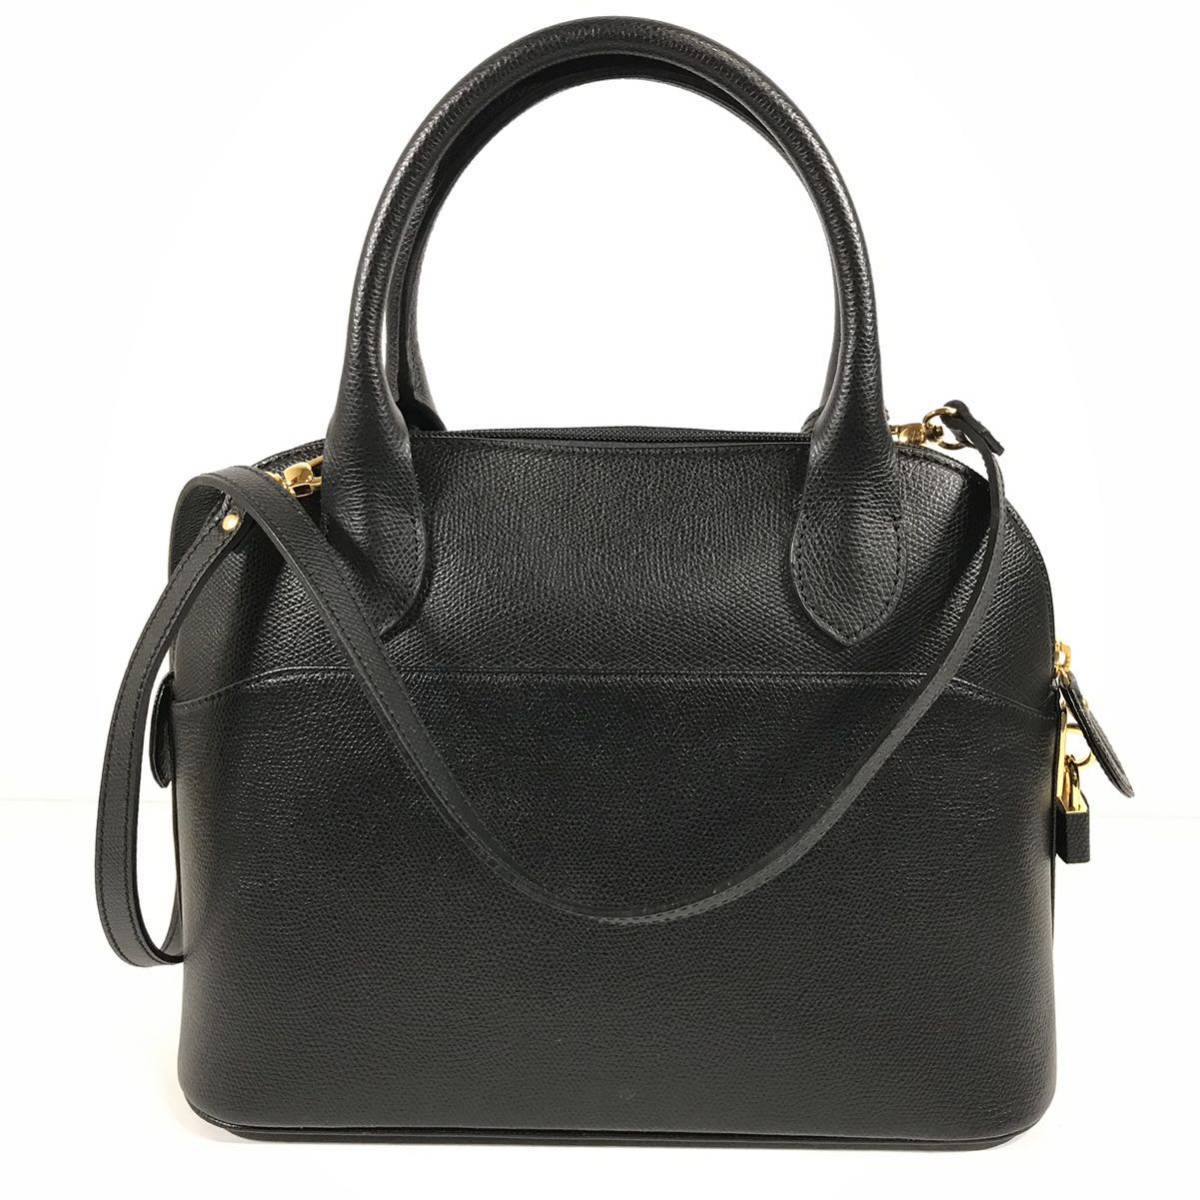  beautiful goods [molabito] genuine article MORABITO handbag DINAtina2way shoulder bag key pado lock attaching leather for women lady's France made 